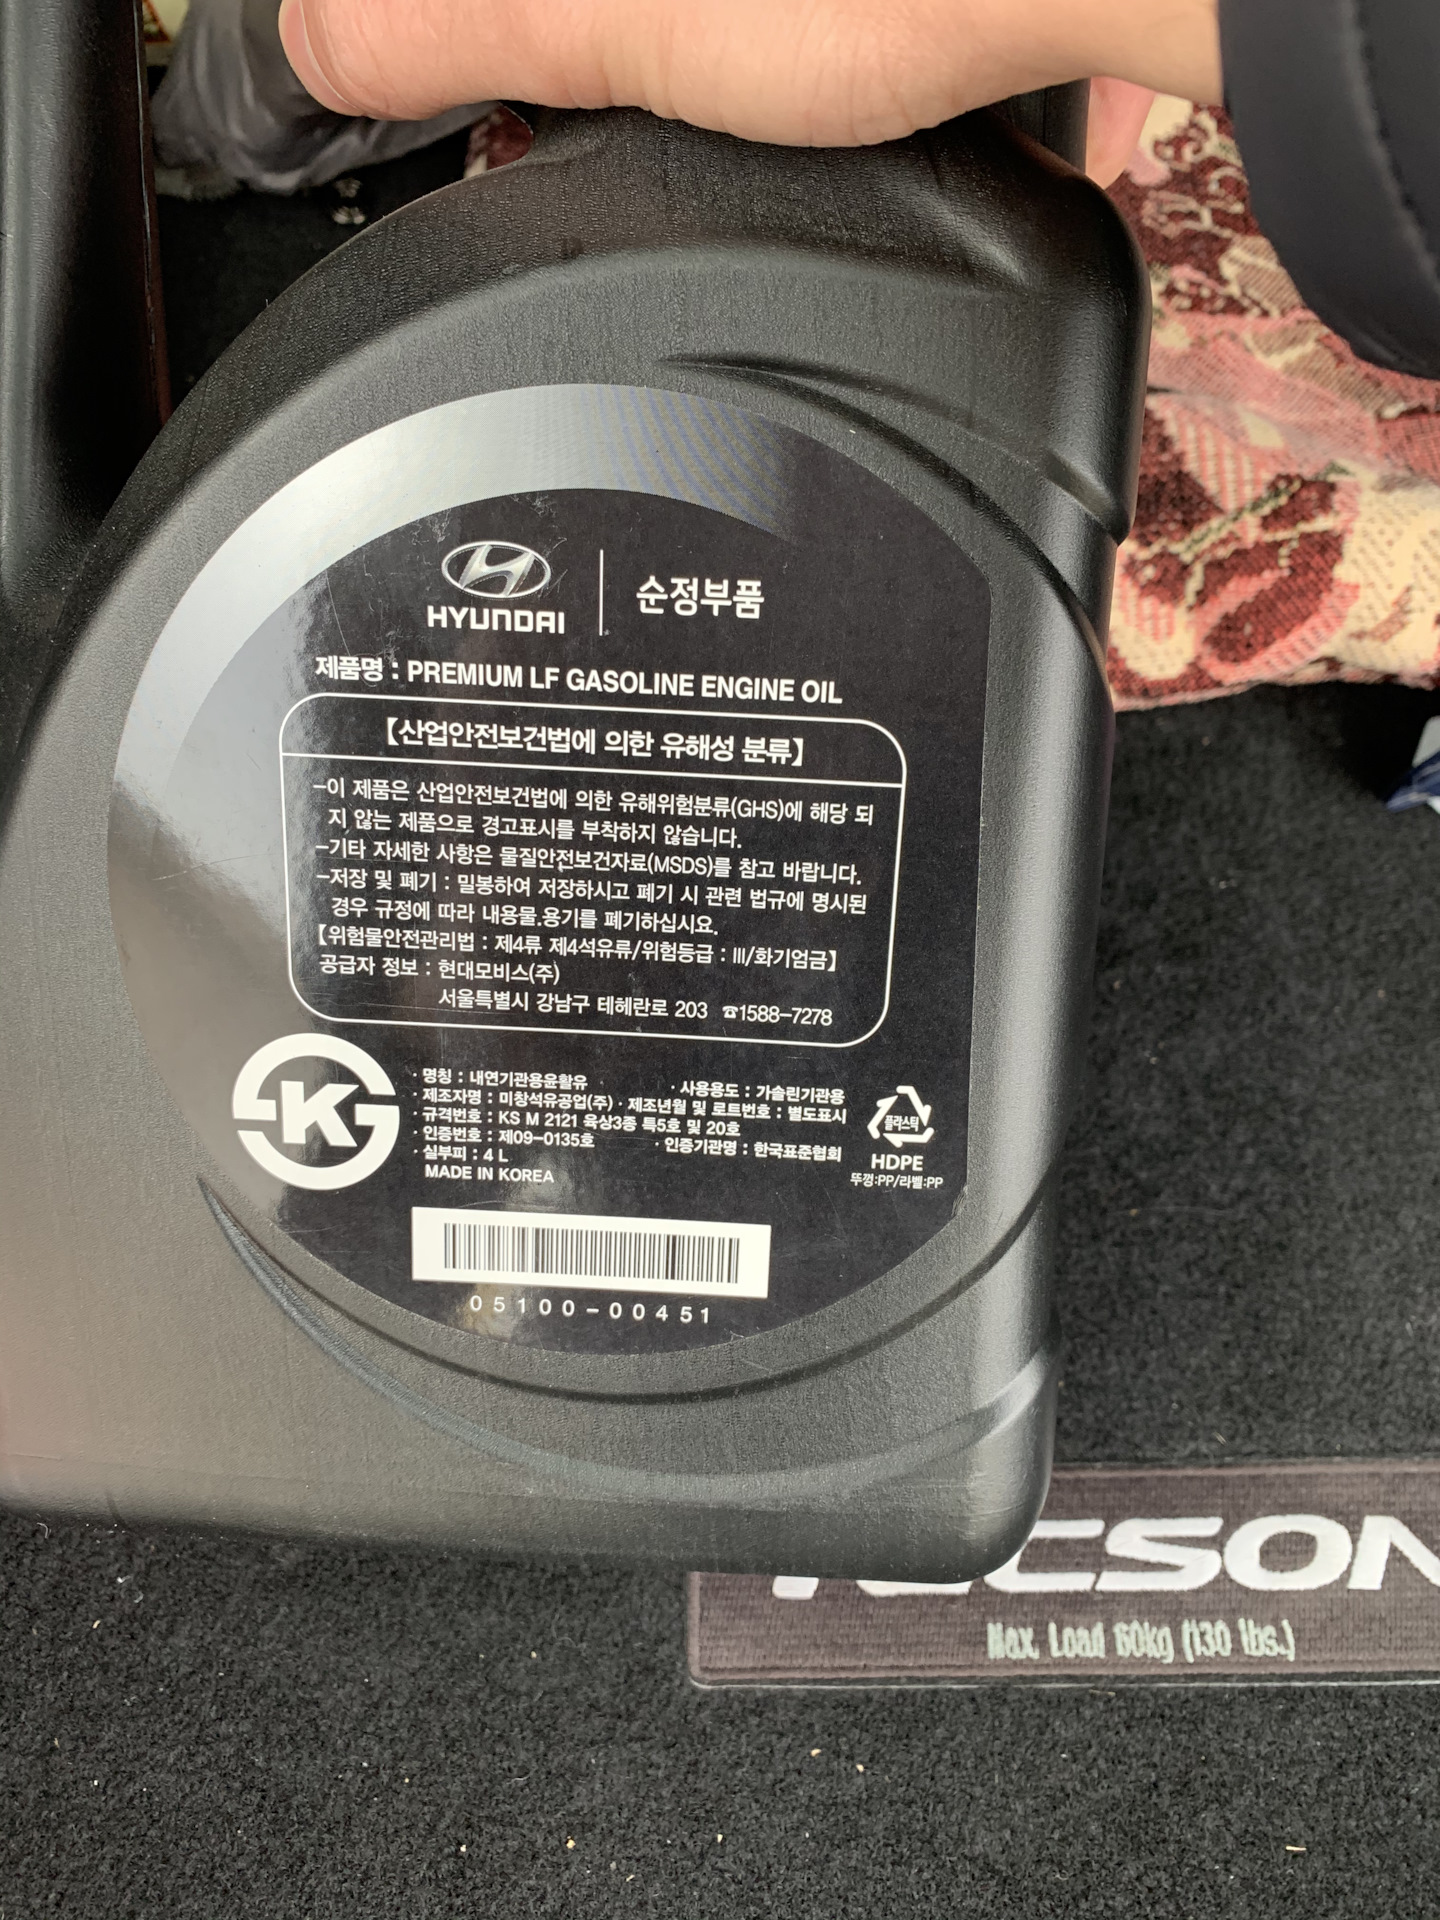 Hyundai Premium LF gasoline 5w-20. Премиум ЛФ 5w20 вес канистры. Прожарка Premium LF 5-20 bmwservice. Хендай туссан масло в двигатель 2.0 бензин